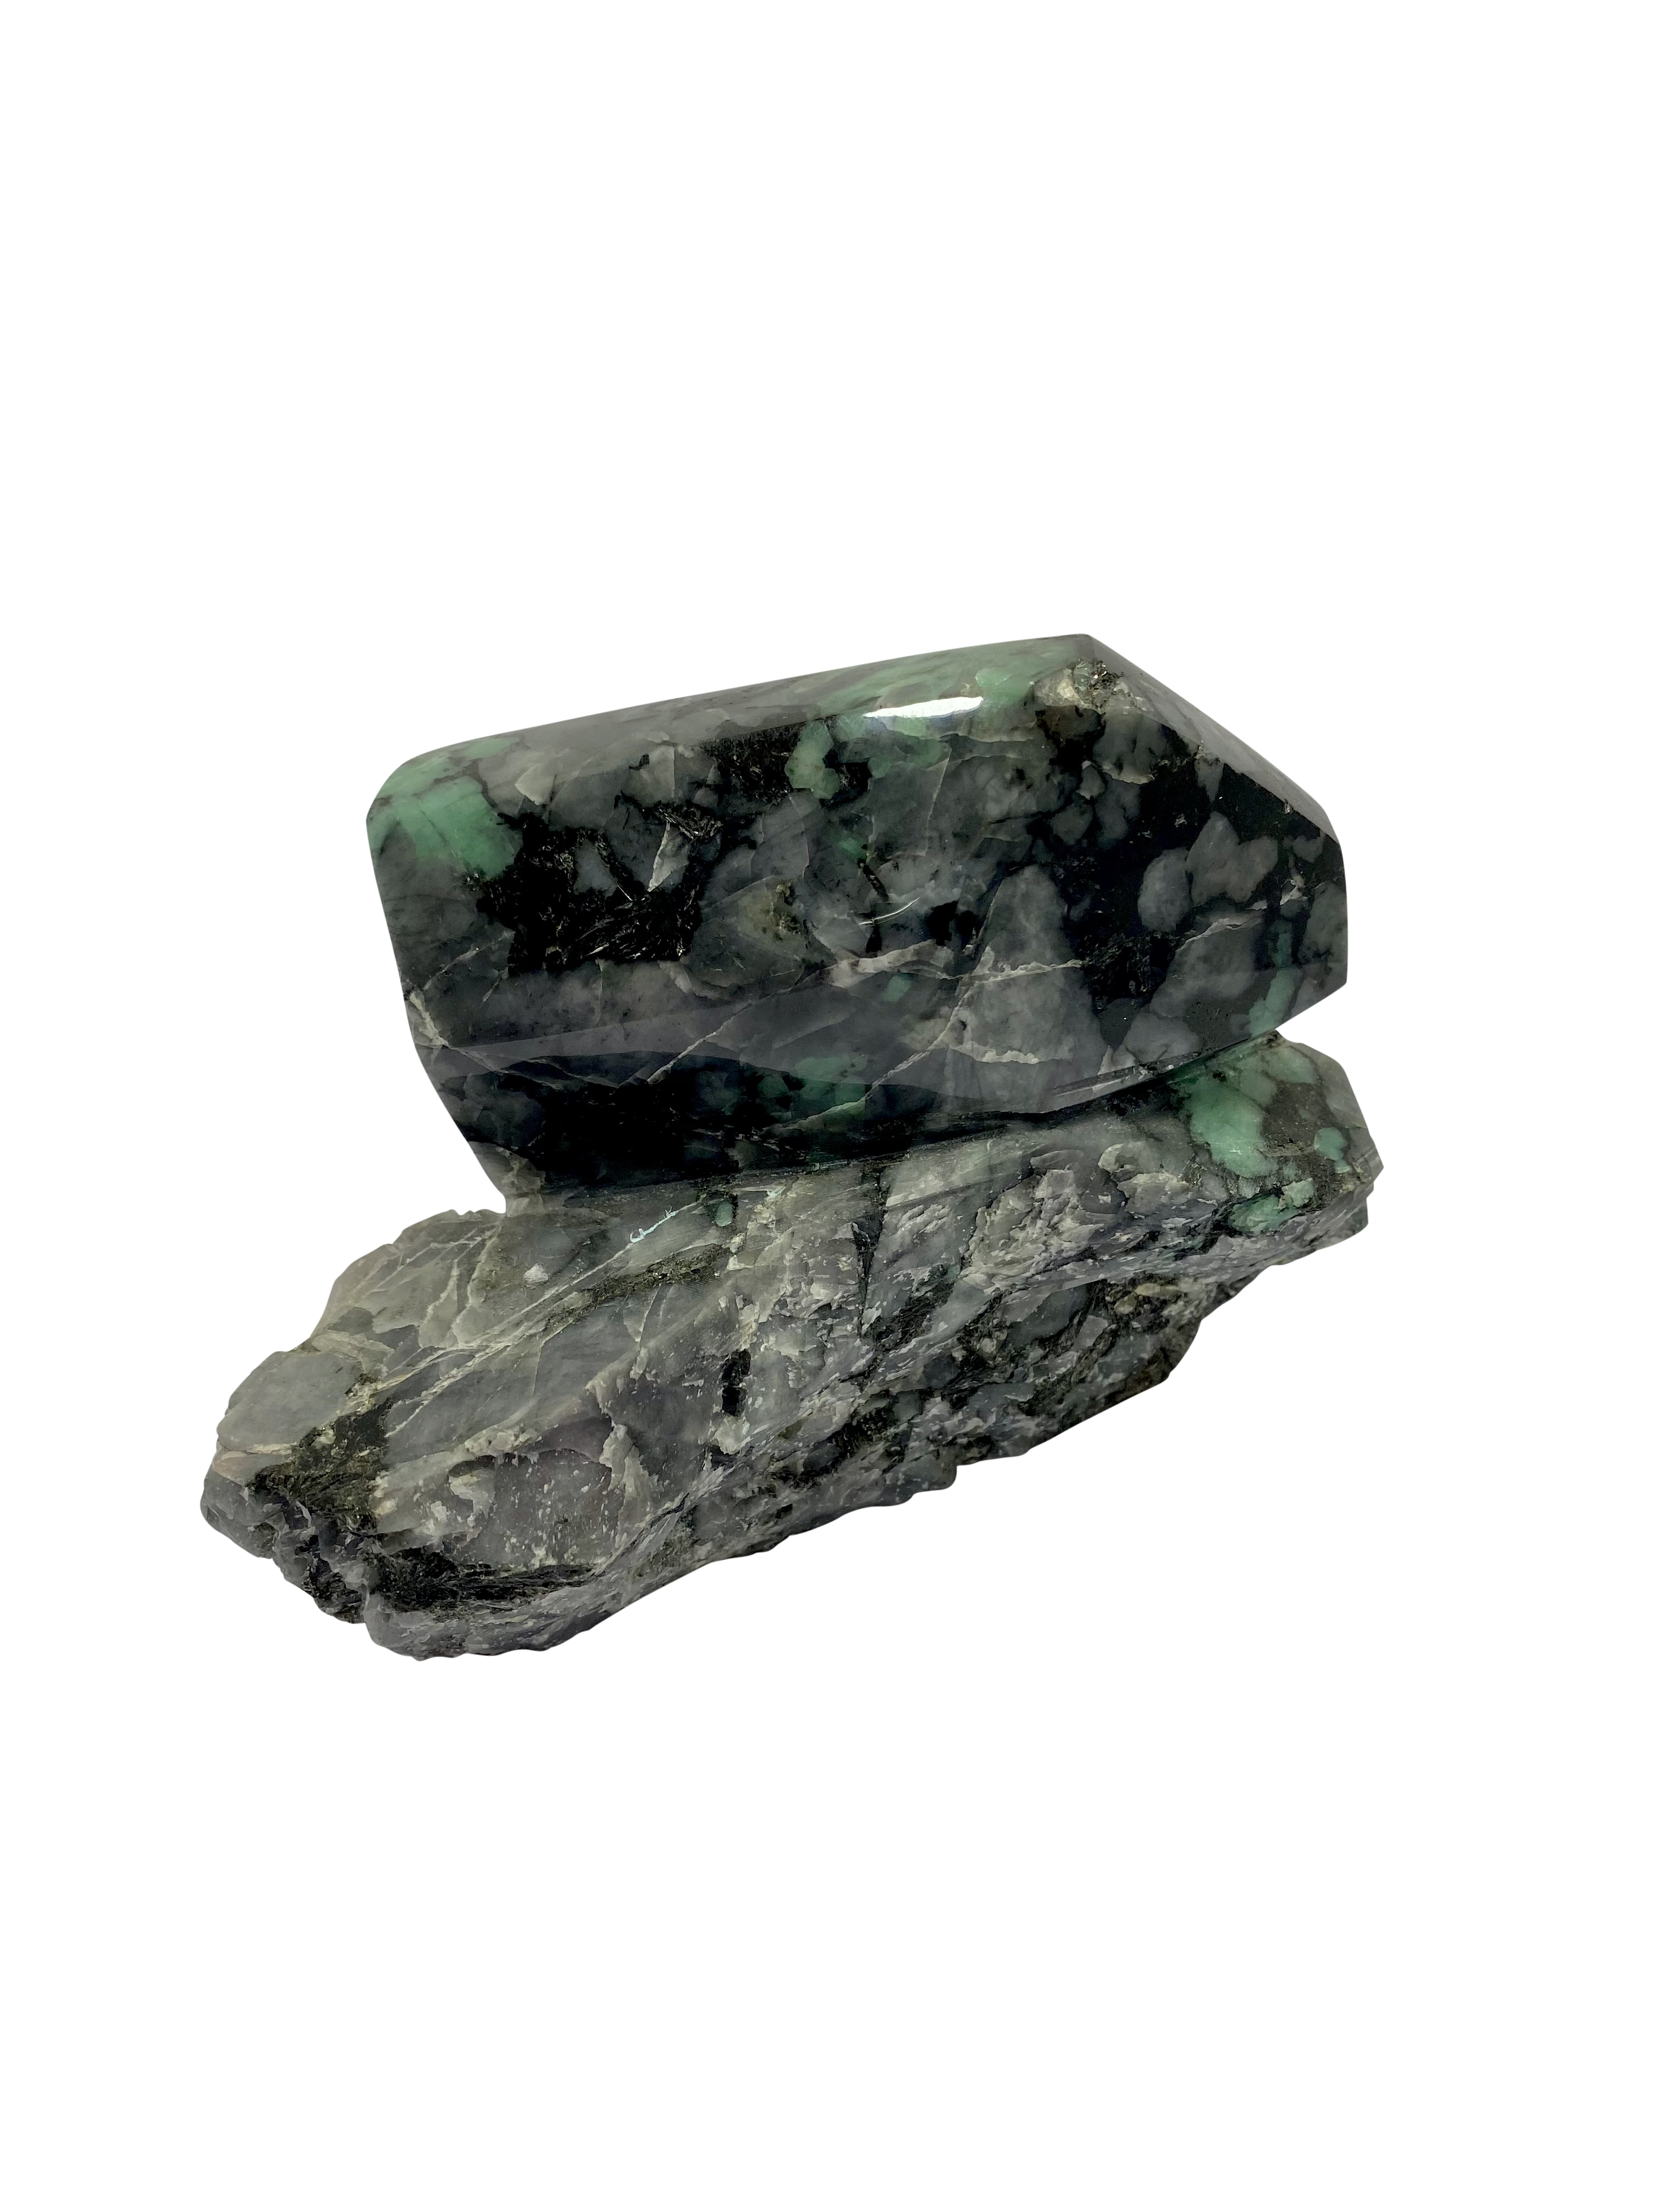 Natural Emerald on Matrix - Polished Large Emerald Stone A